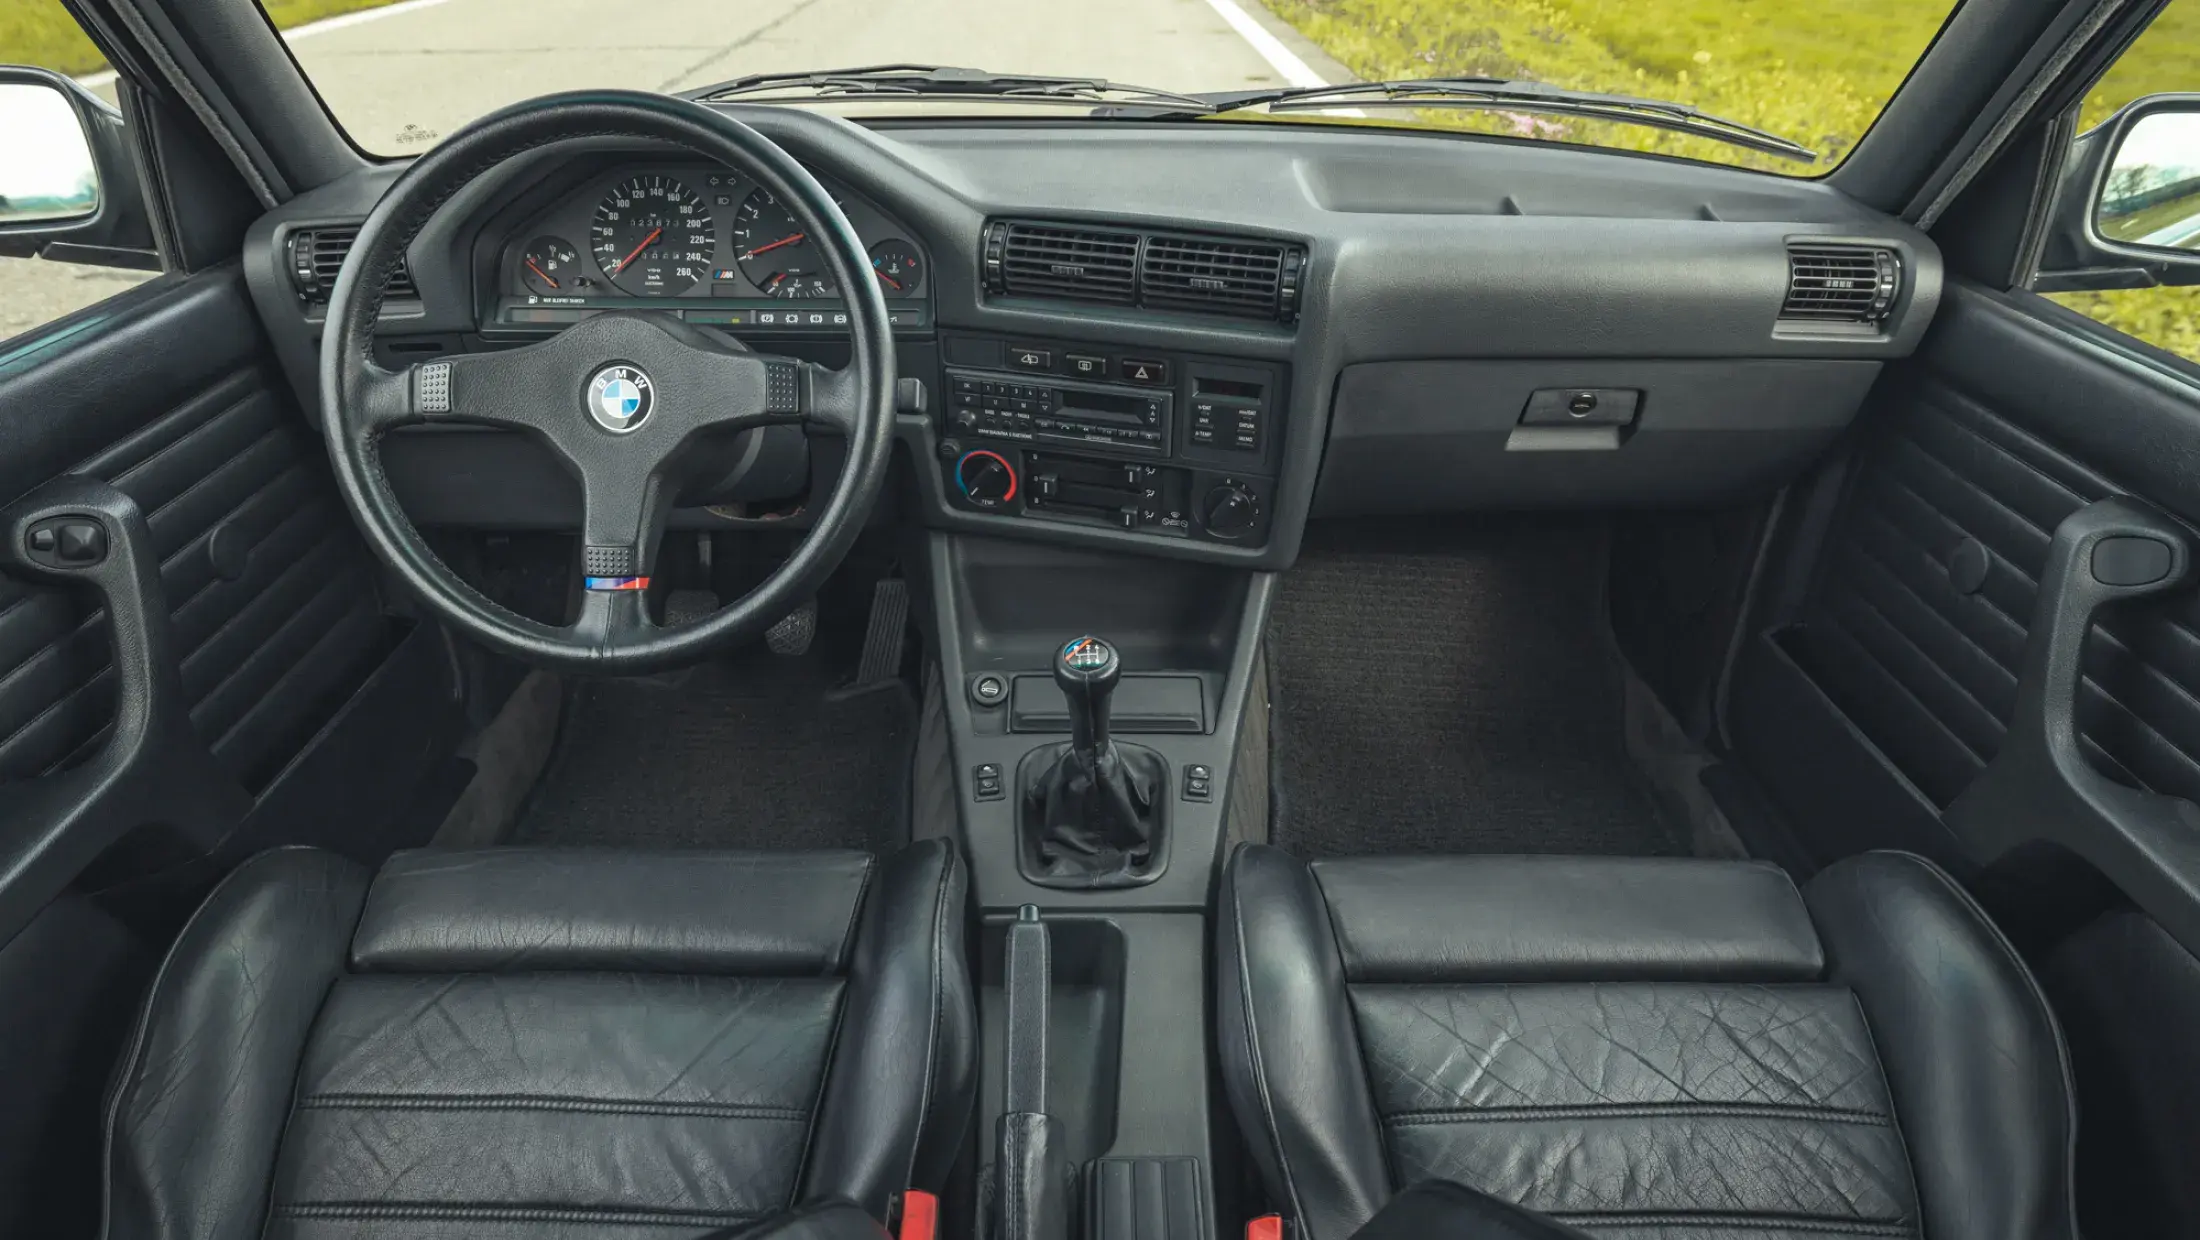 BMW E30 M3 Diamond Black Metallic Handgeschakeld first hand 1988 low mileage